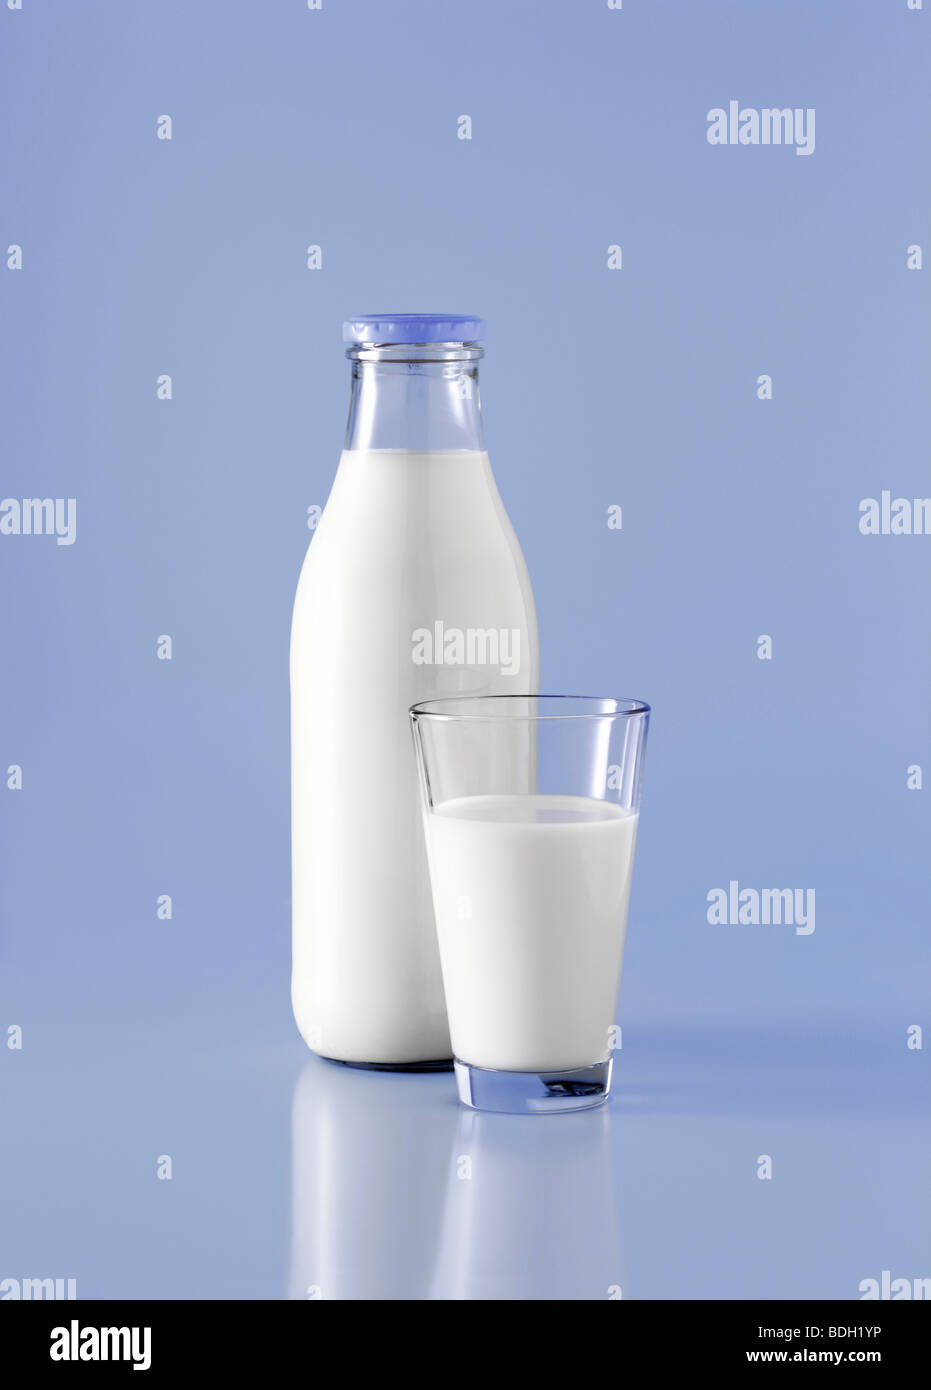 One bottle of milk Stock Photo